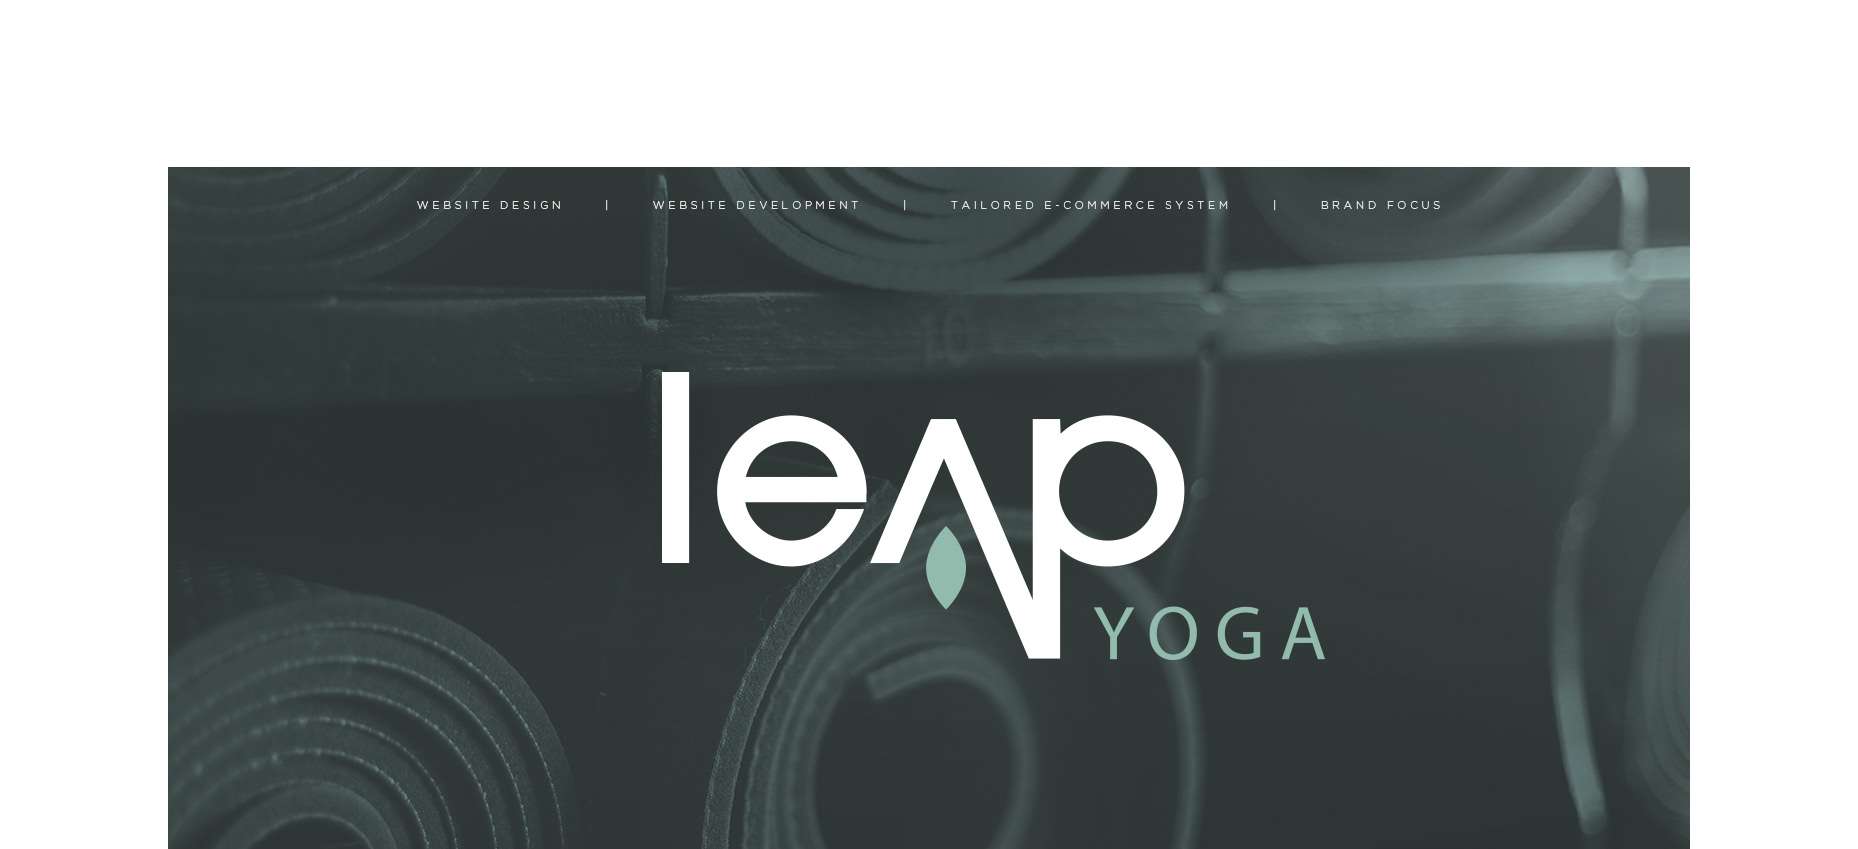 Leap Yoga image 0